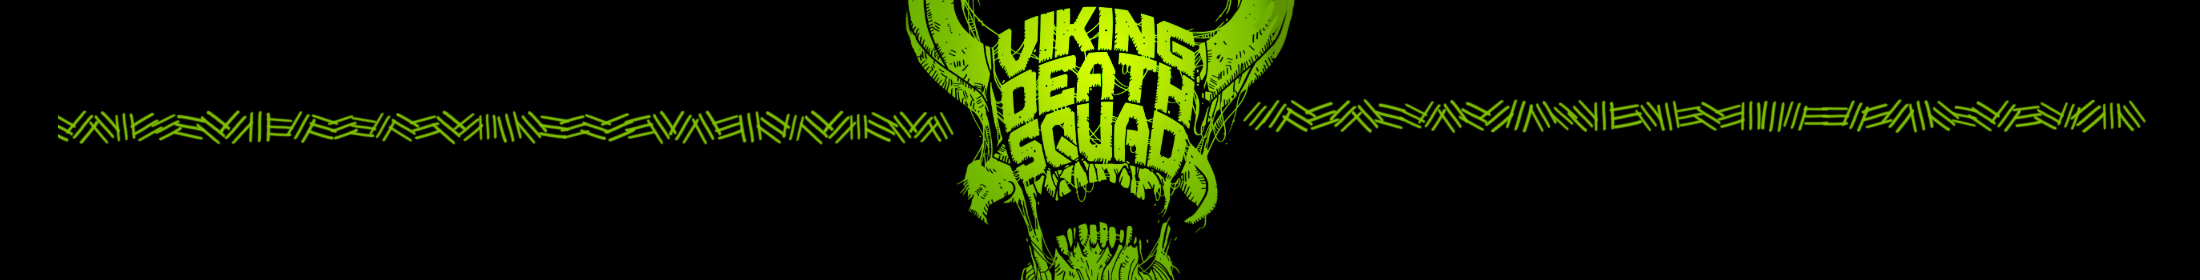 Viking Death Squad